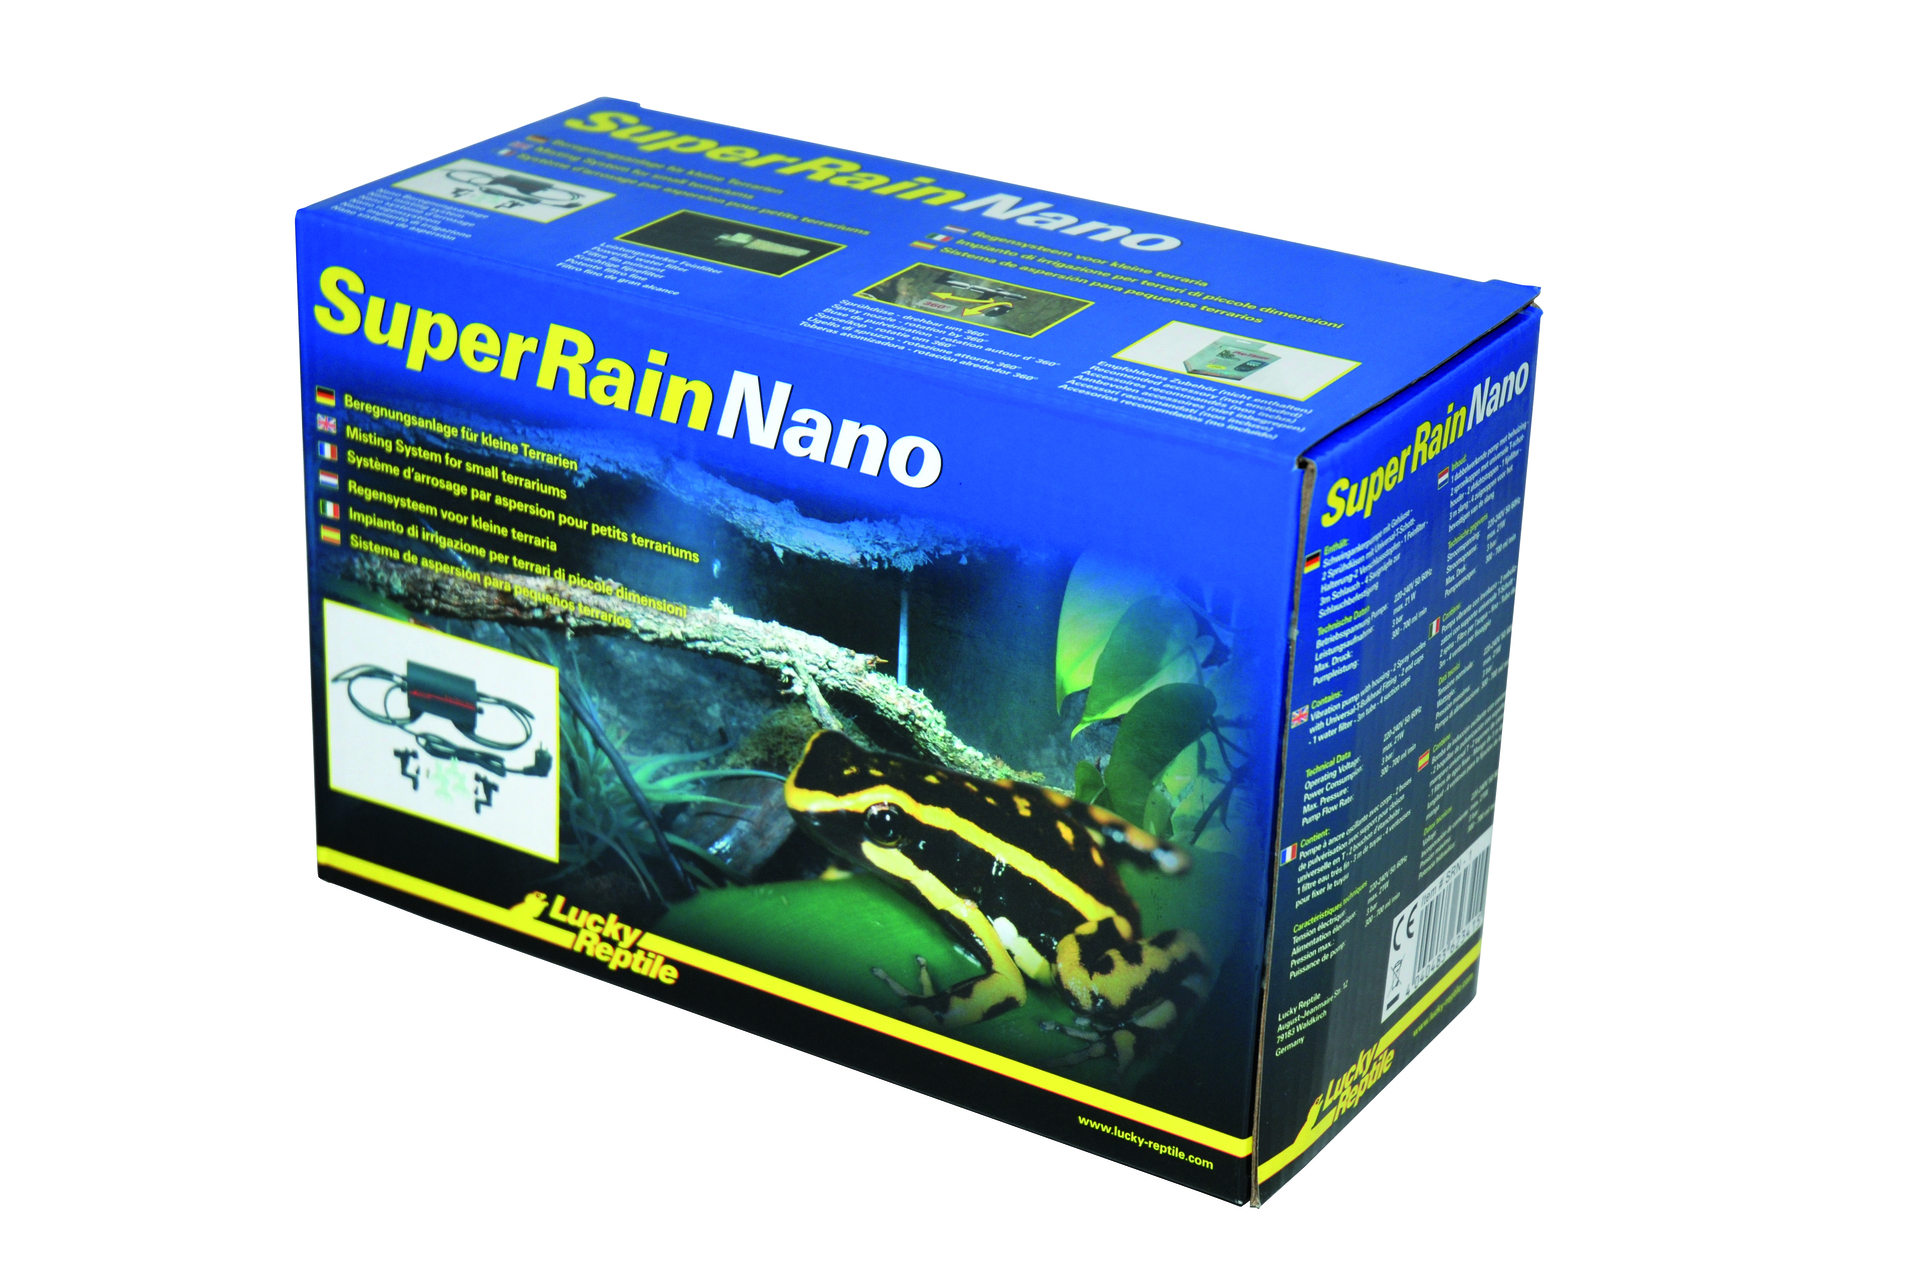 Import-Export Peter Hoch GmbH Super Rain Nano – Beregnungsanlage